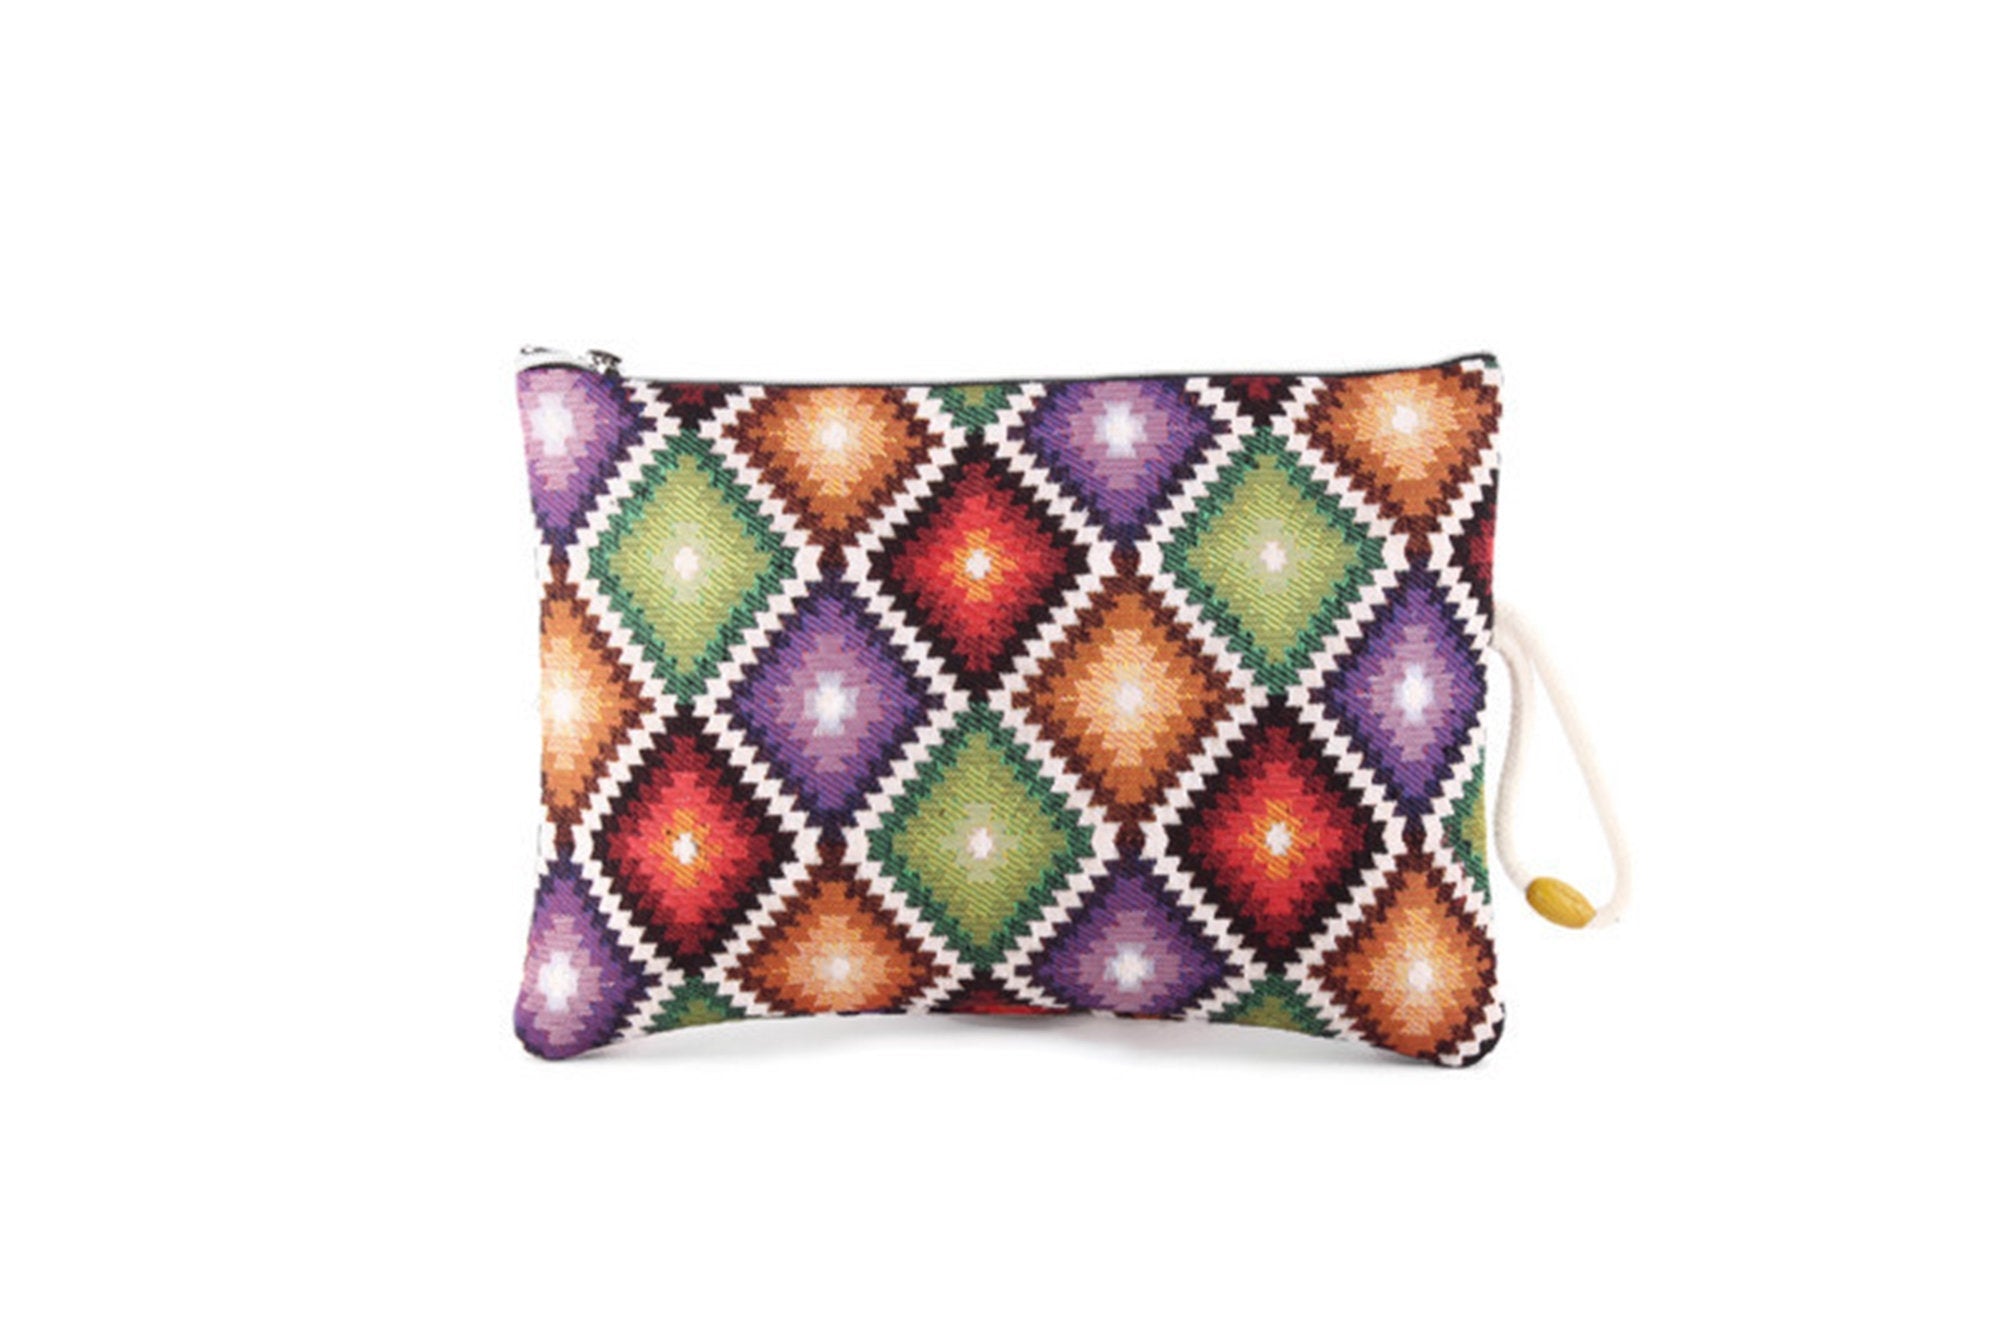 Lights Vintage Style Ethnic Turkish Boho Purse Bag | Clutch | Cosmetic bag | Hippie Bag | Bohemian Bag | Hand Bag | Clutch Purse | Kilim Bag